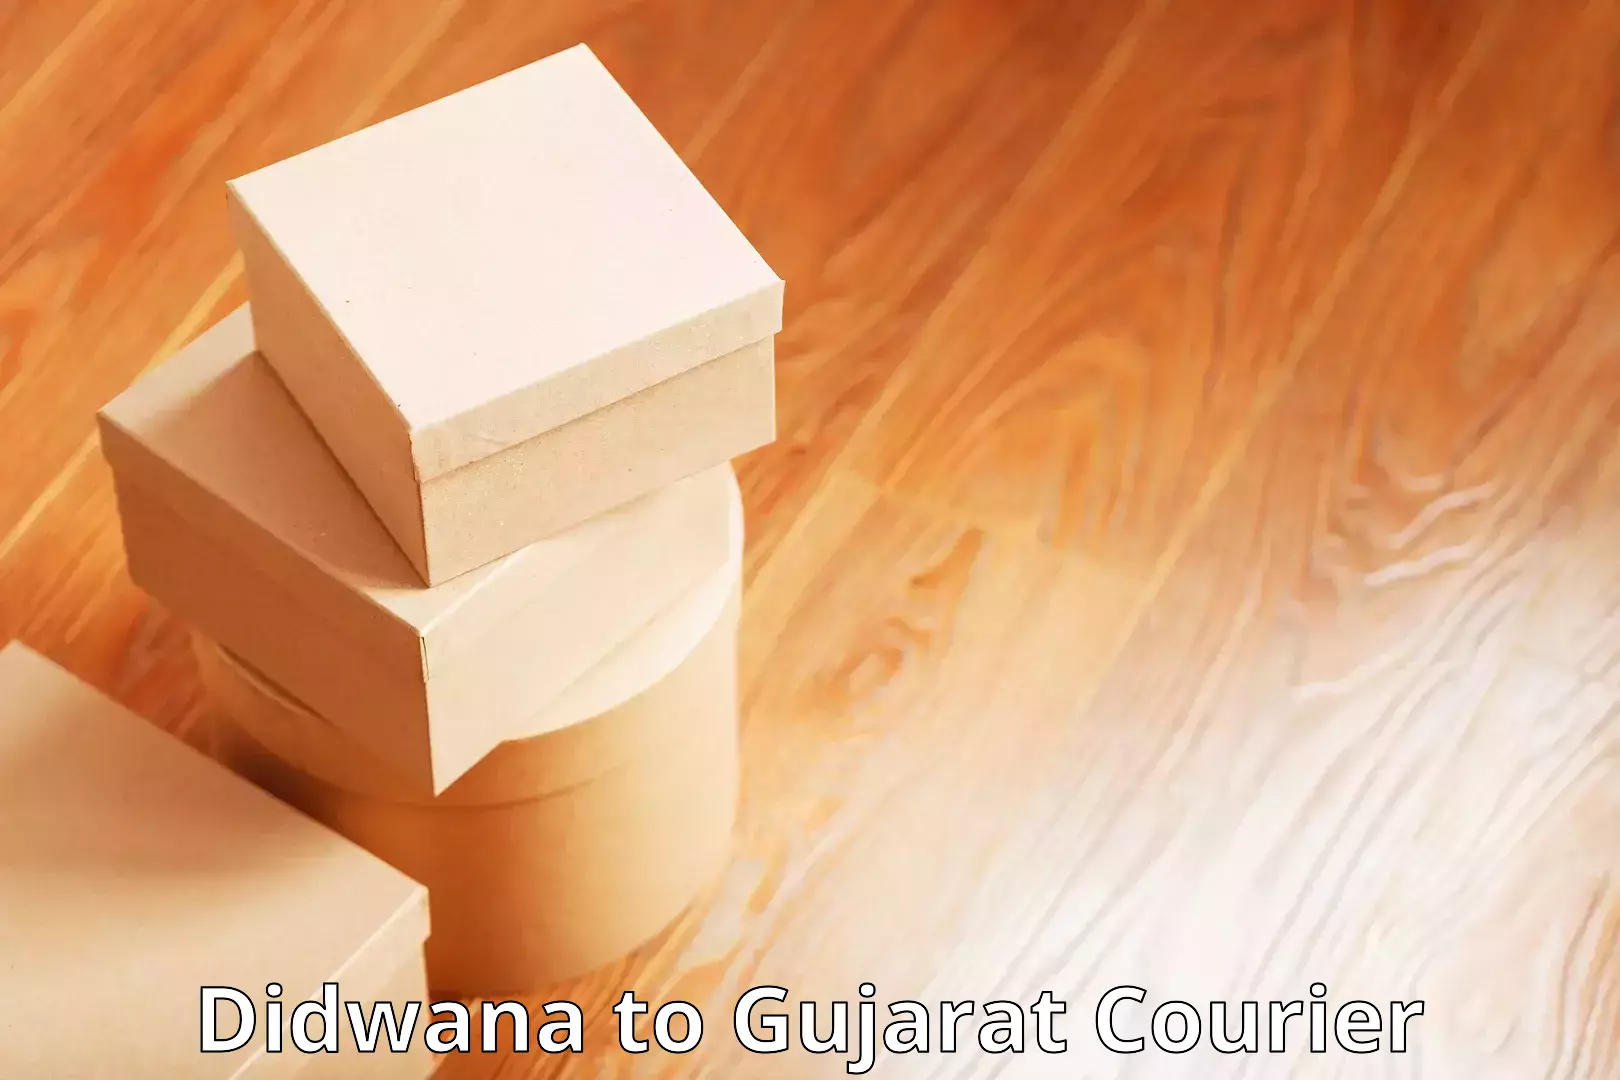 Courier service innovation Didwana to Gujarat